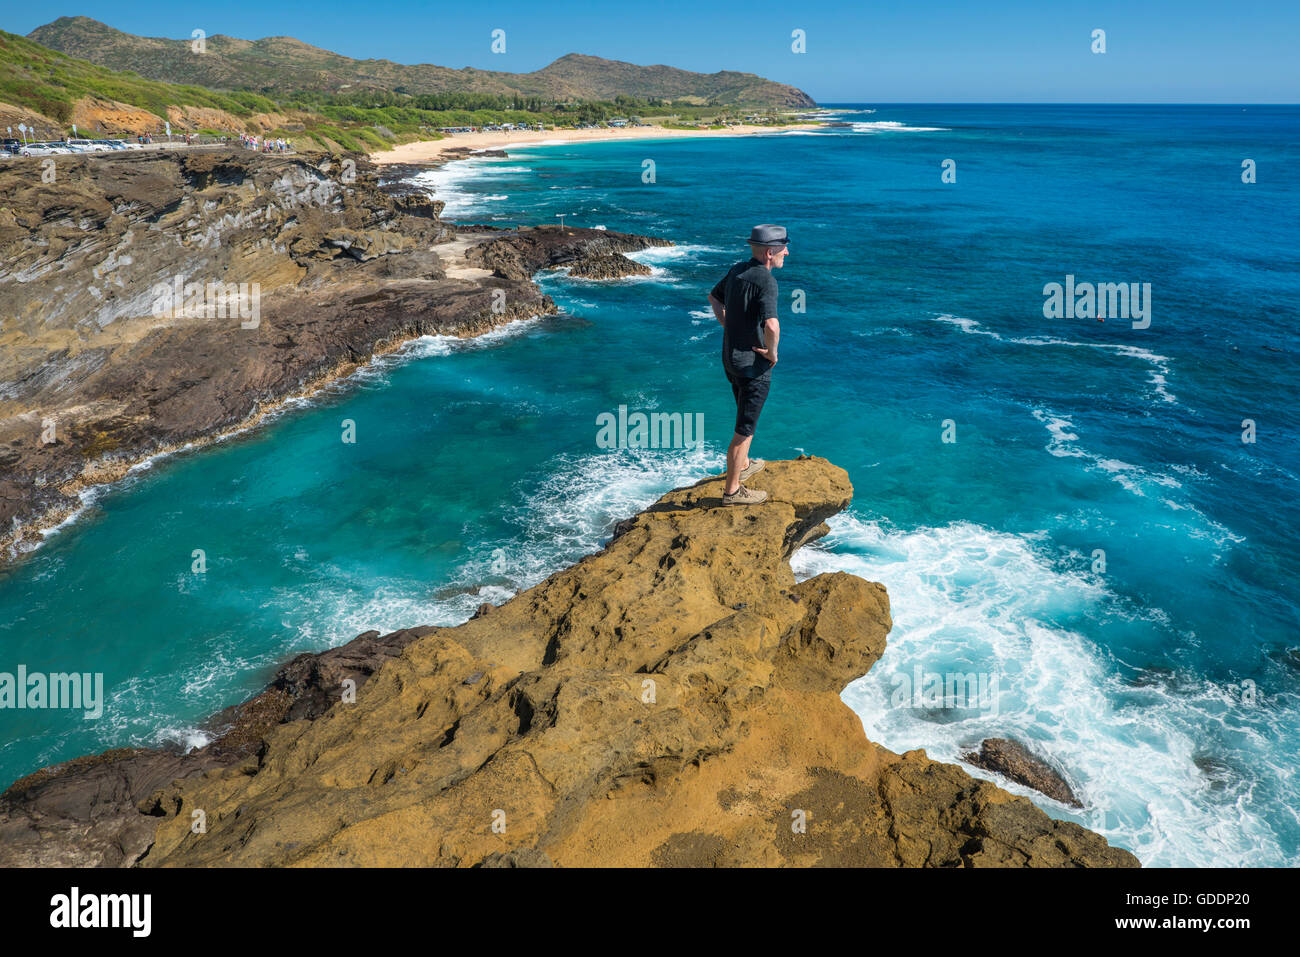 Stati Uniti d'America,Hawaii,Oahu,Costa sud,Halona Blowhole Lookout,l'uomo sul punto di vista signor Foto Stock